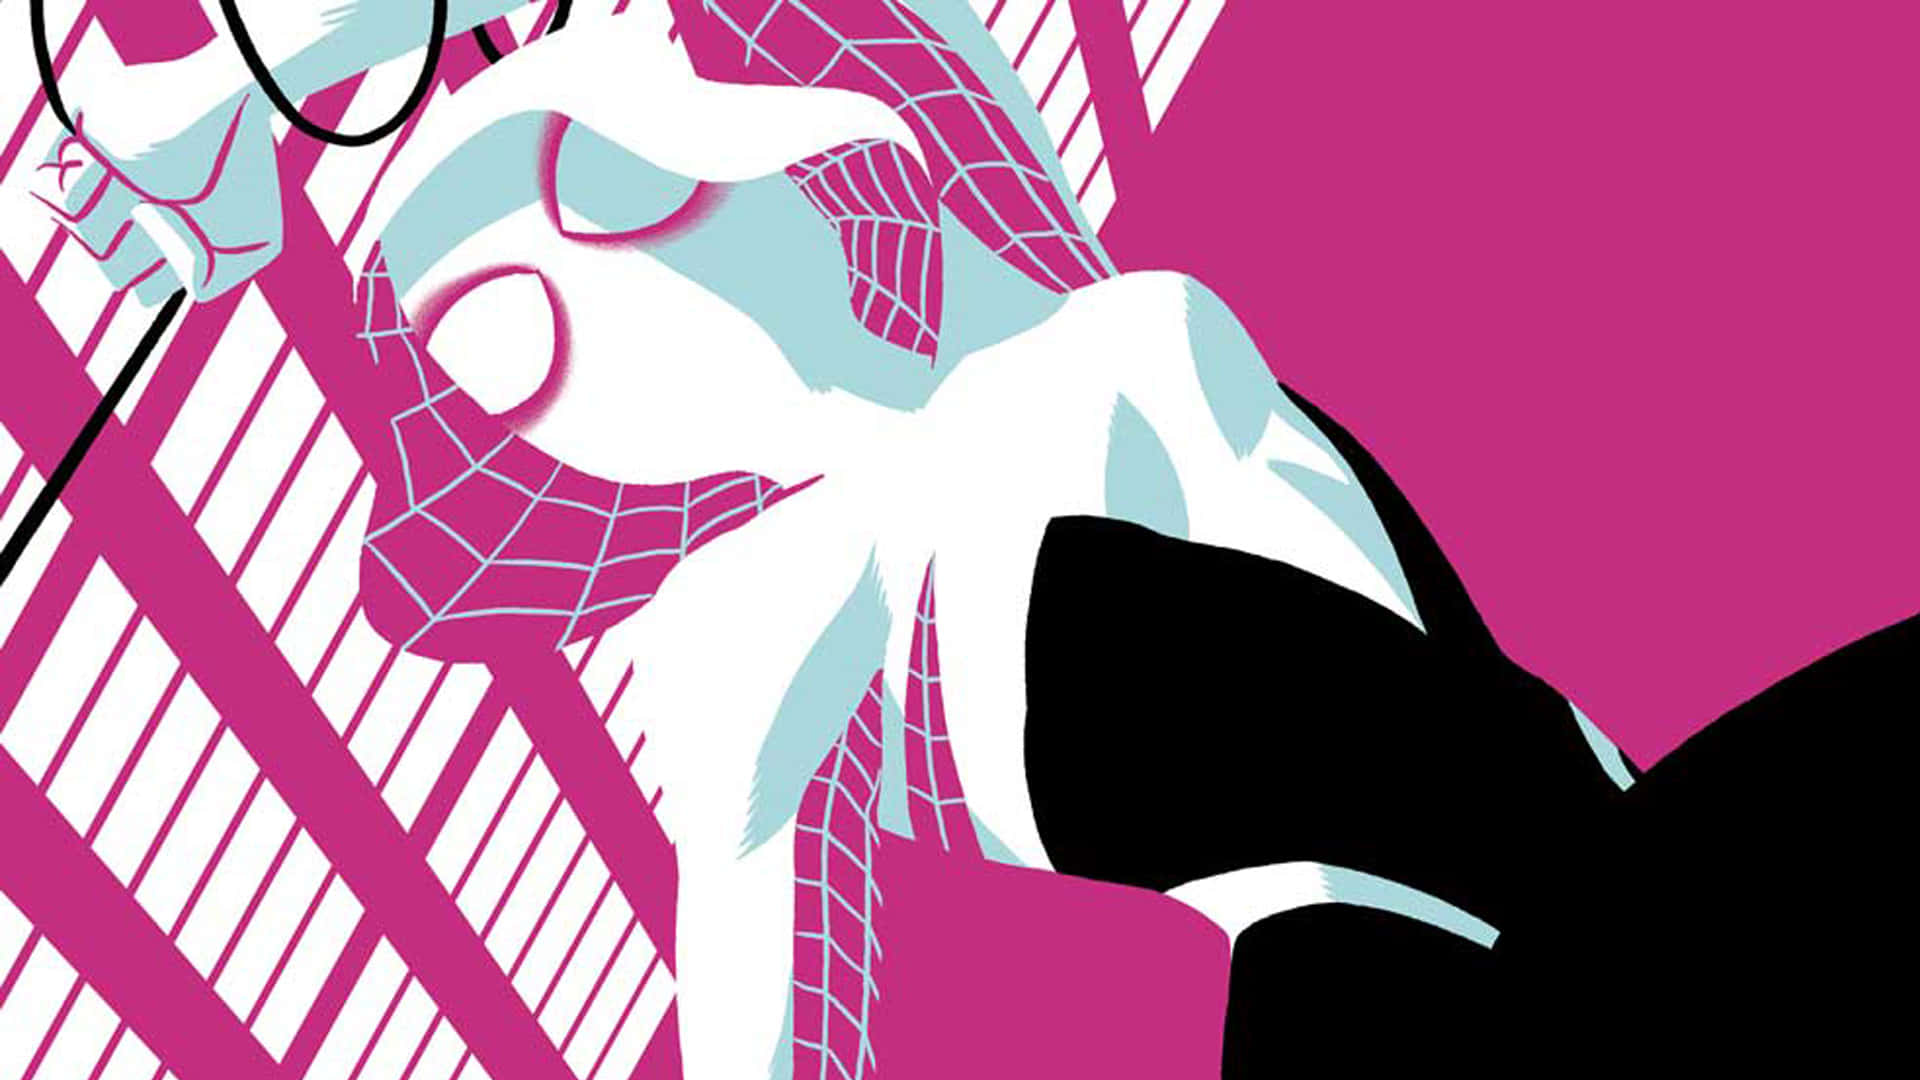 The Superpowered Duo - Spider Gwen and Spider Man